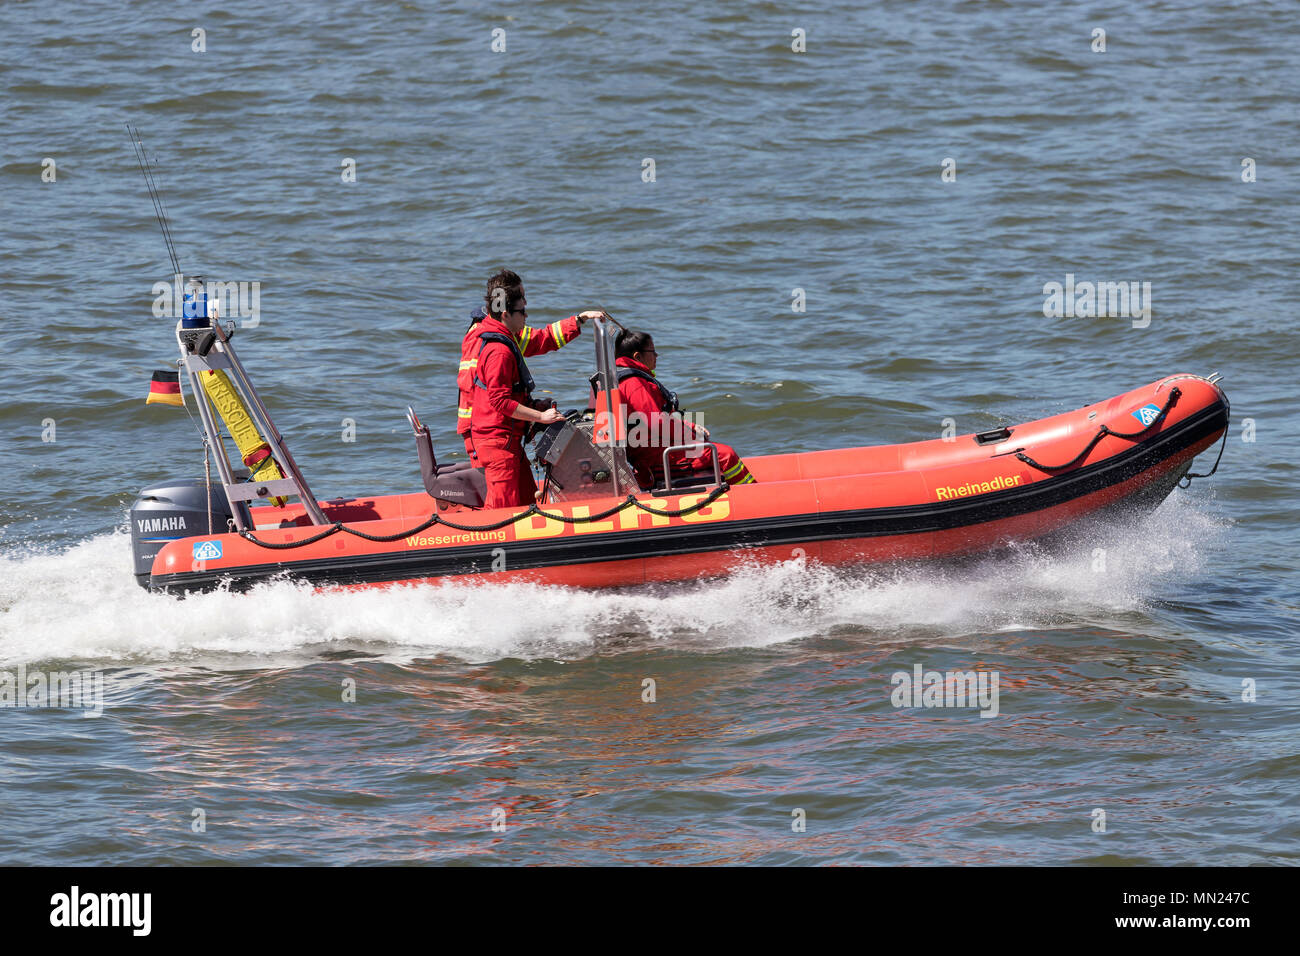 Speedboat RHEINADLER of the DLRG on the river Rhine. The DLRG is the largest voluntary lifesaving organization in the world. Stock Photo